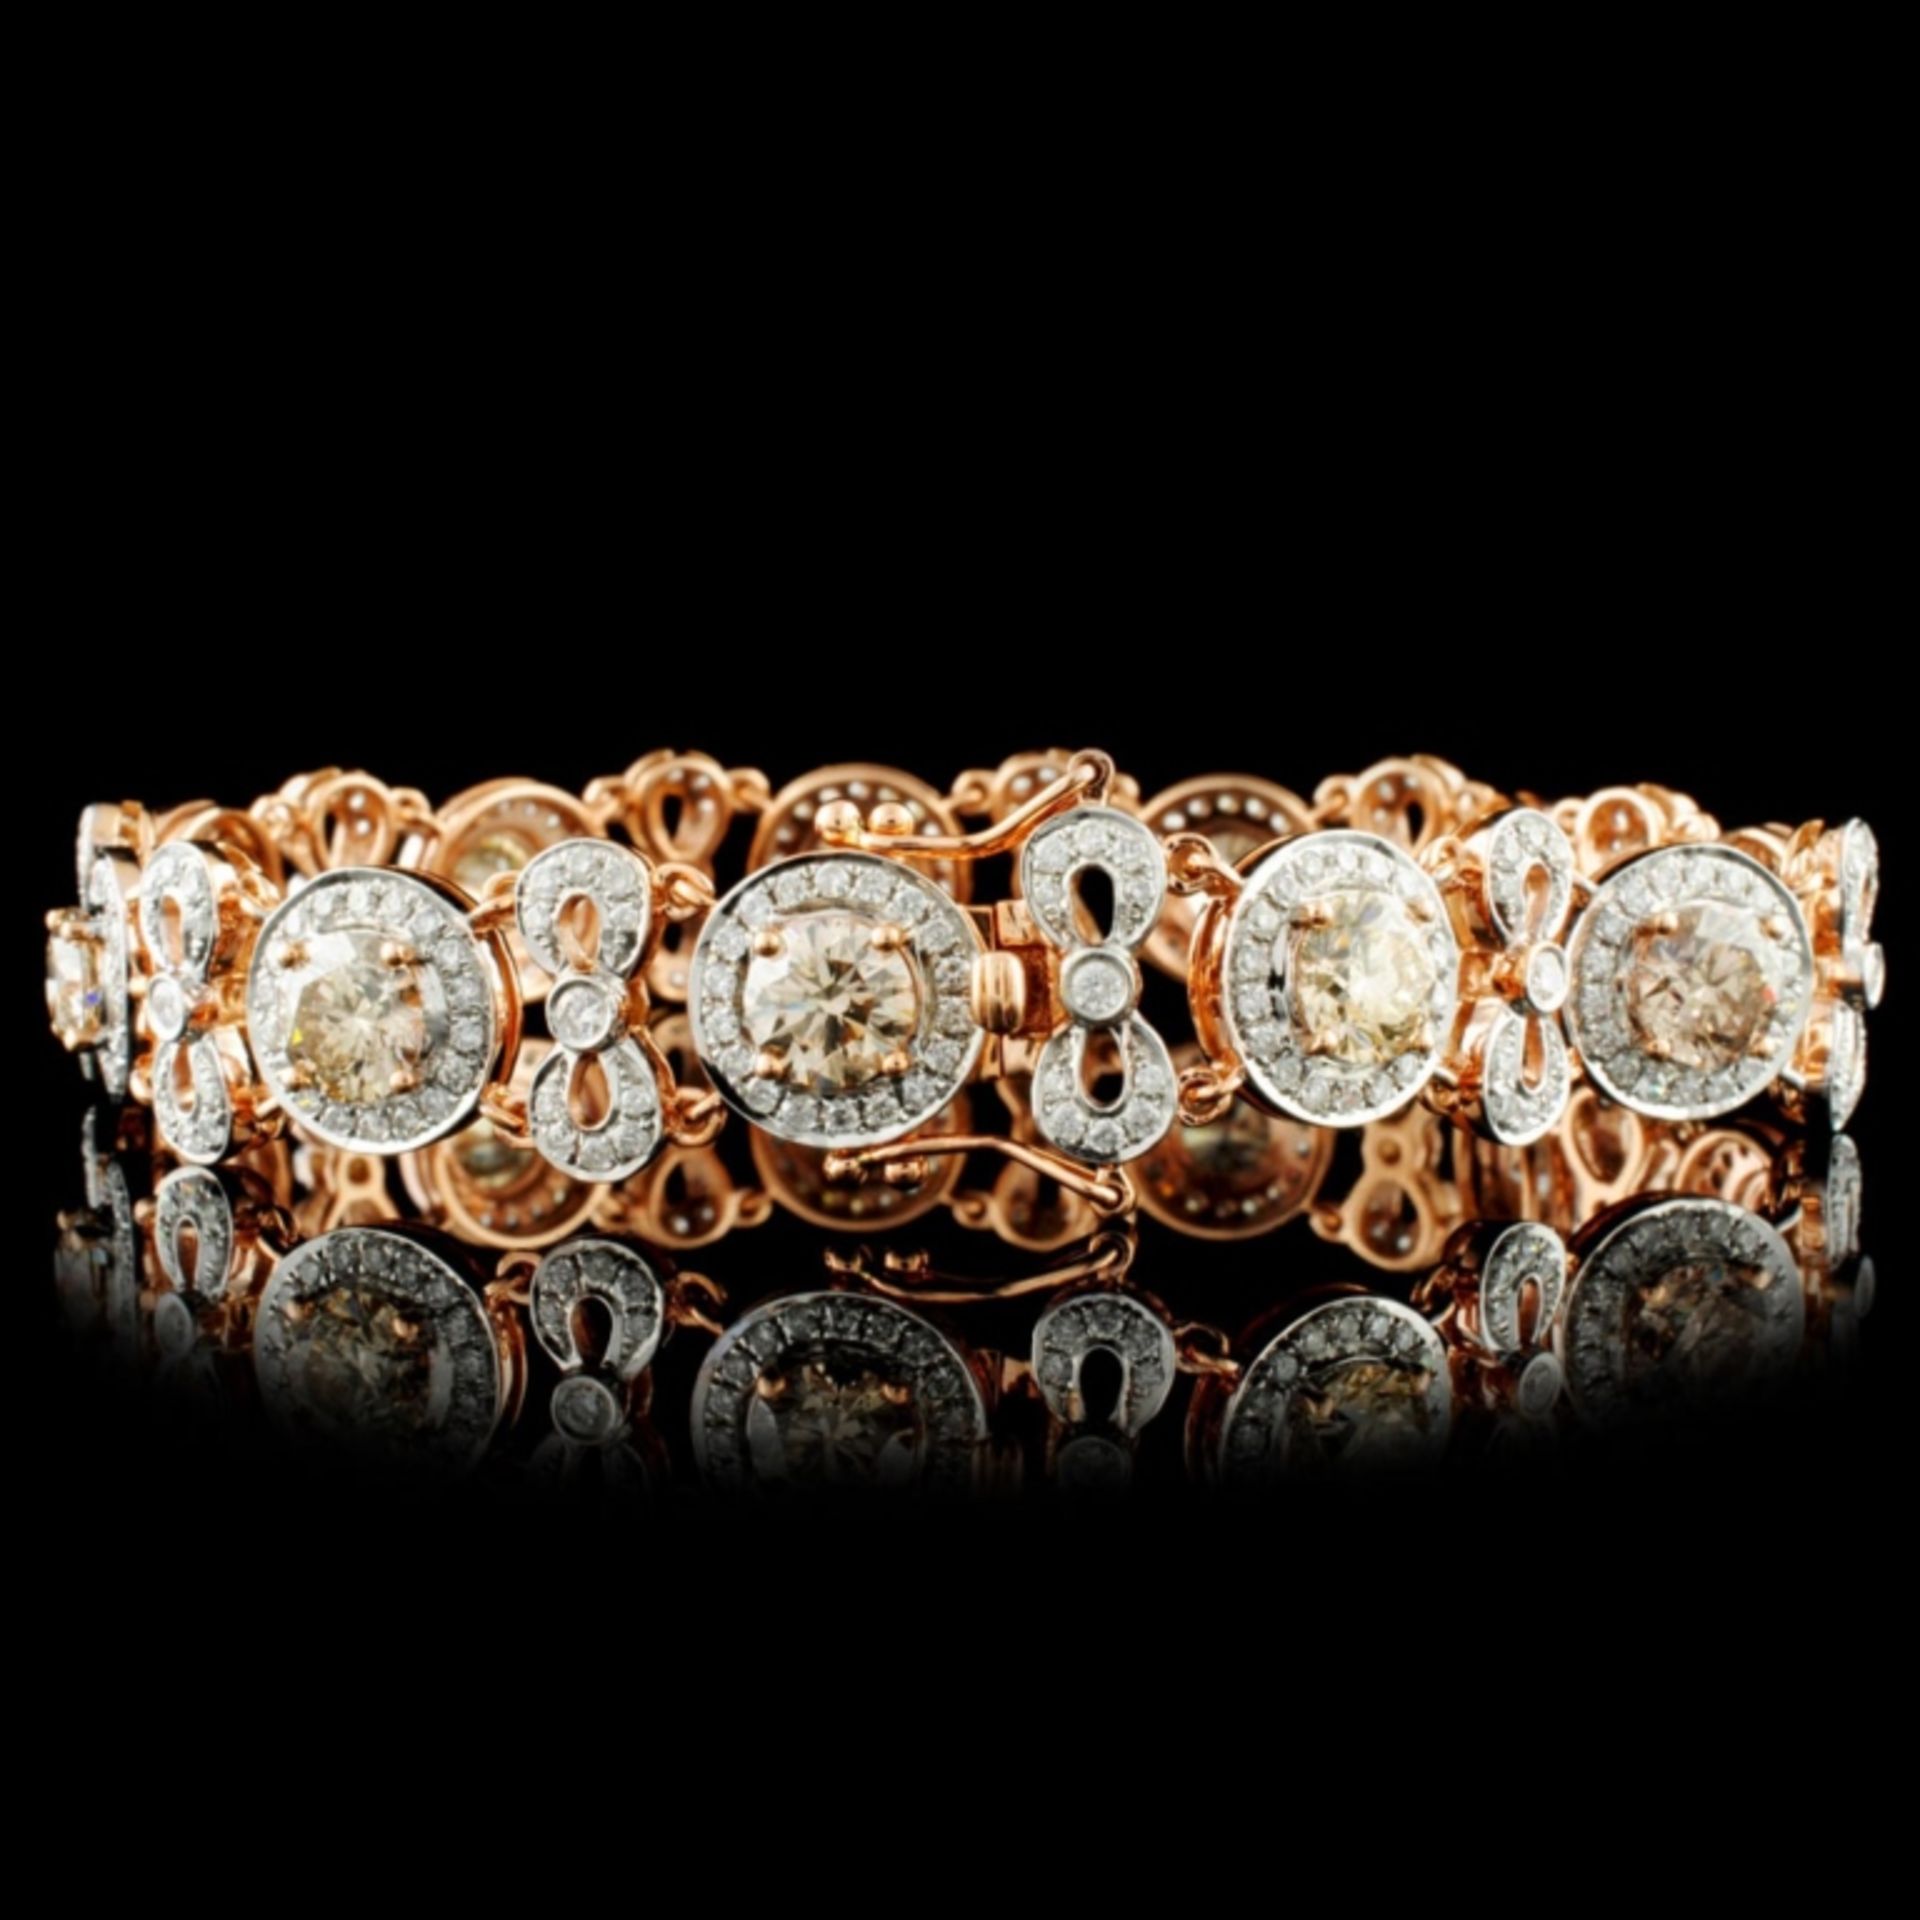 18K Gold 8.55ctw Diamond Bracelet - Image 2 of 4